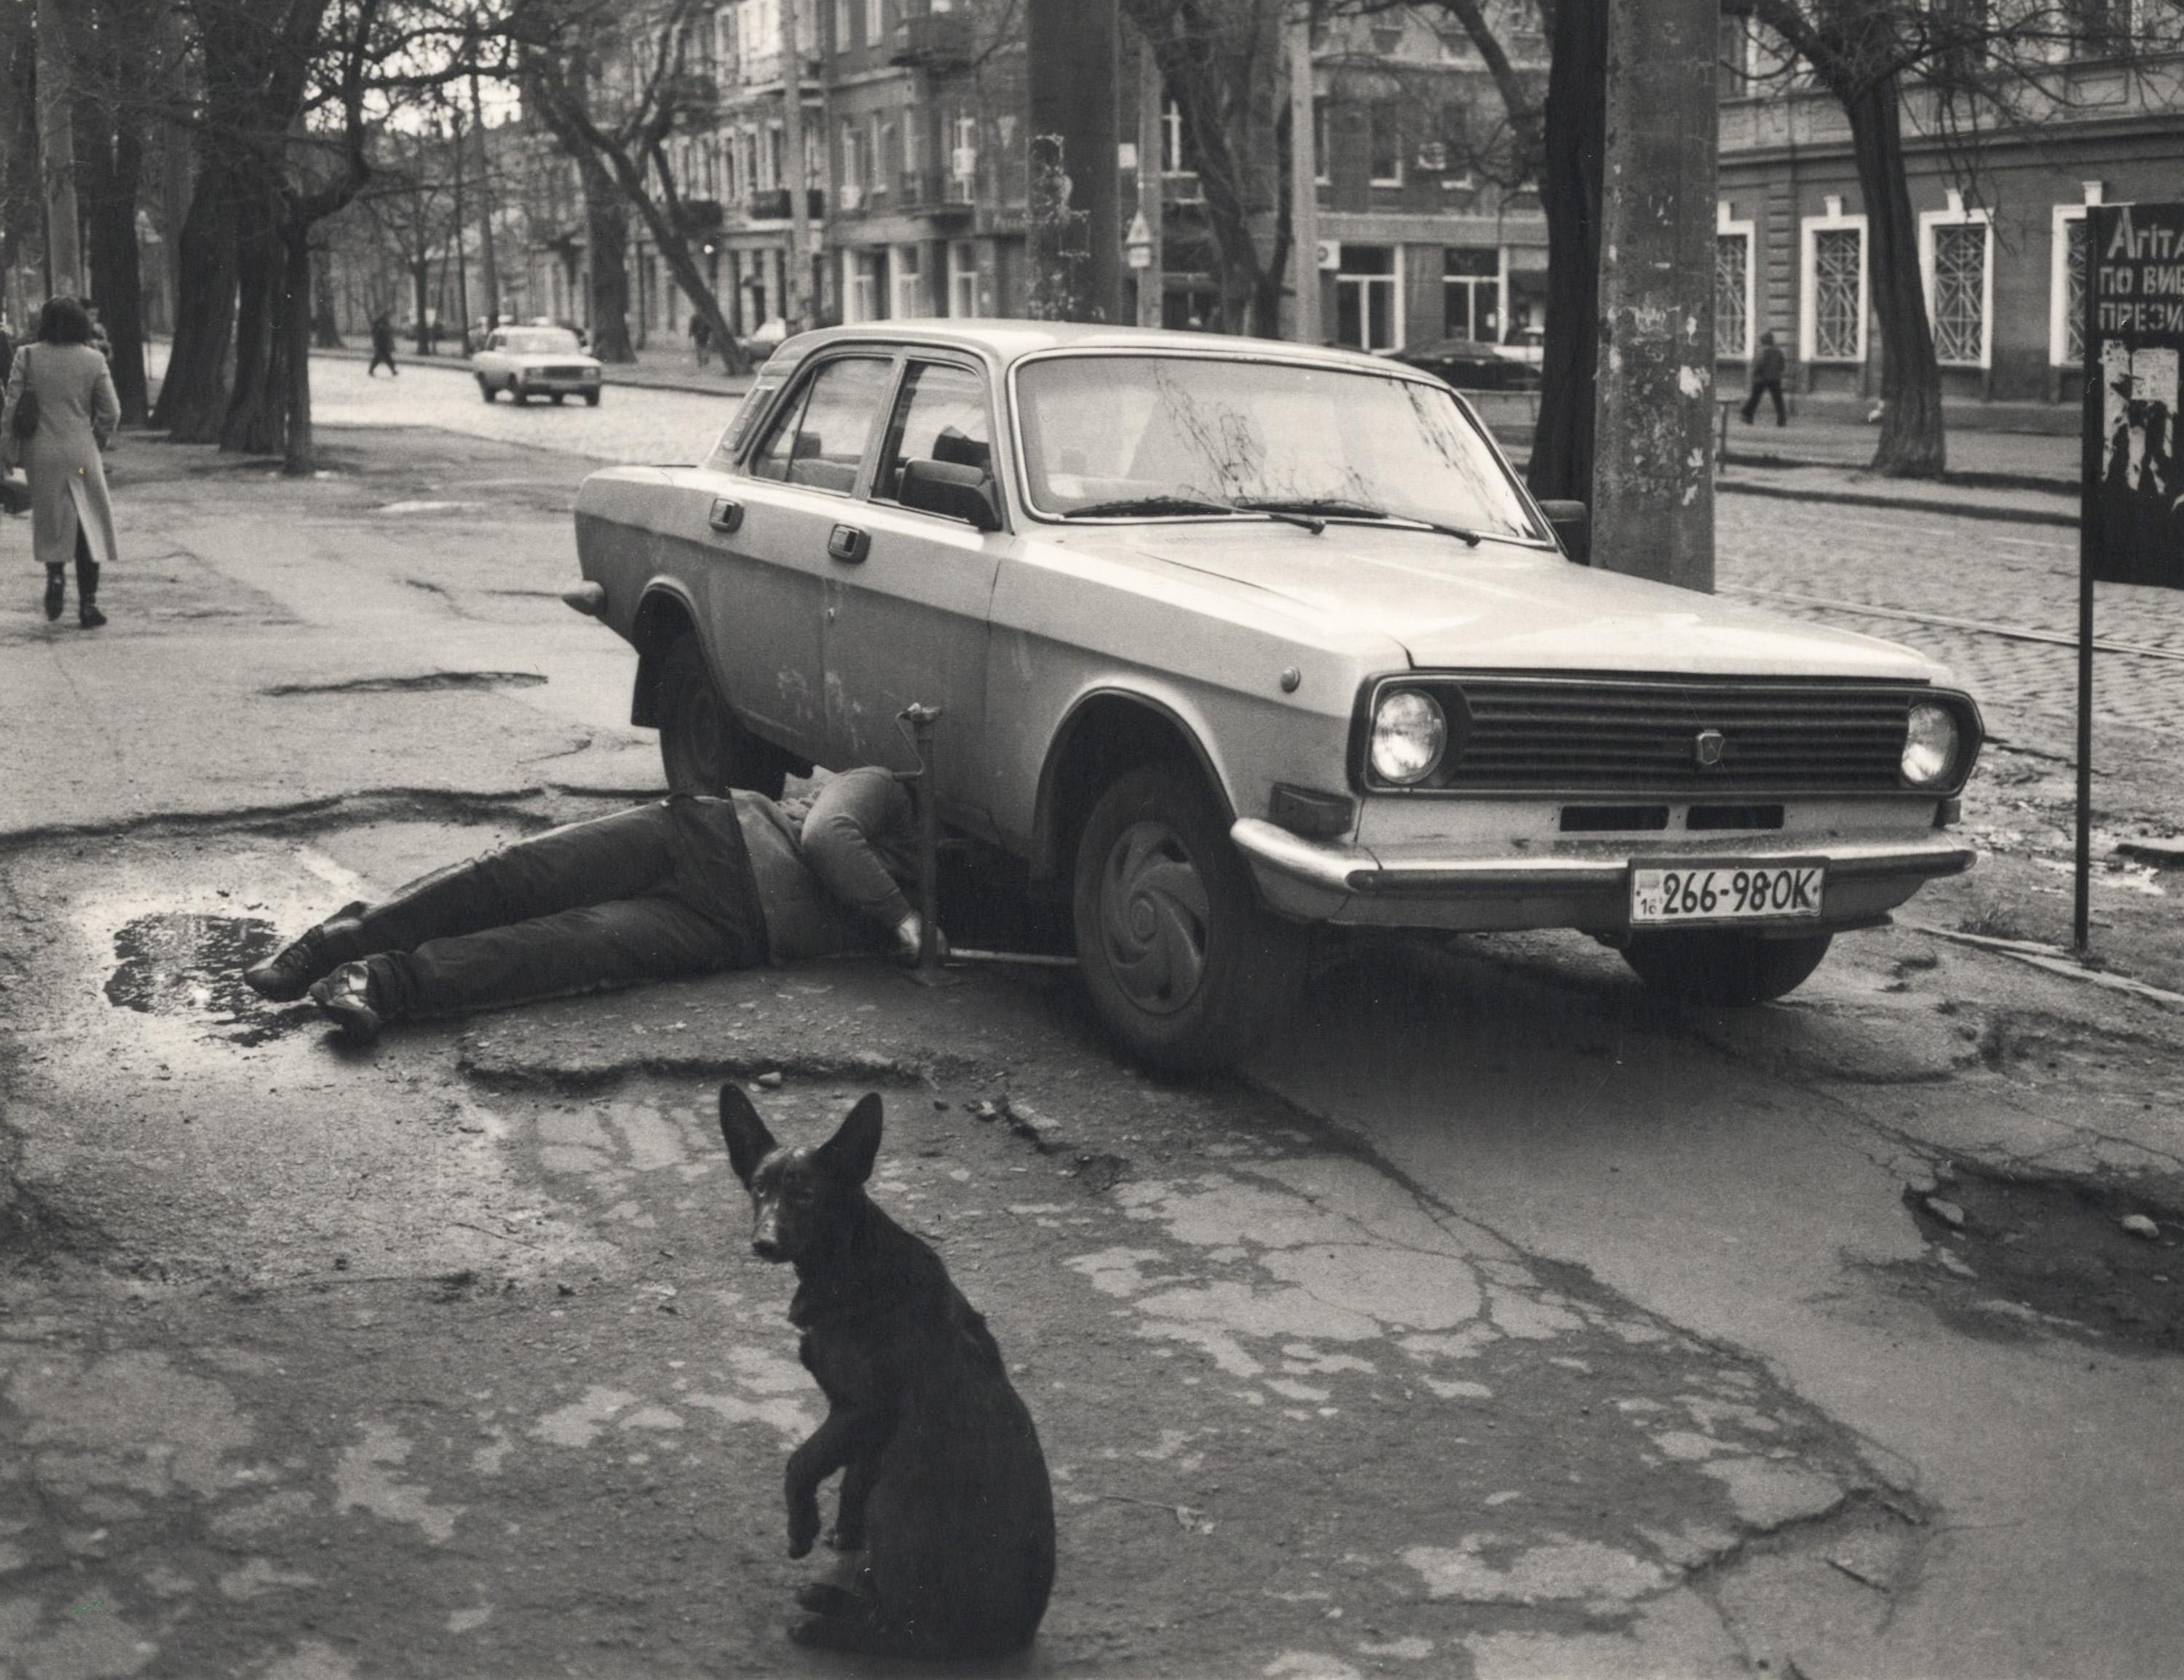 Pentti Sammallahti Black and White Photograph - Odessa, Ukraine (Man repairing vehicle on sidewalk & Black dog)